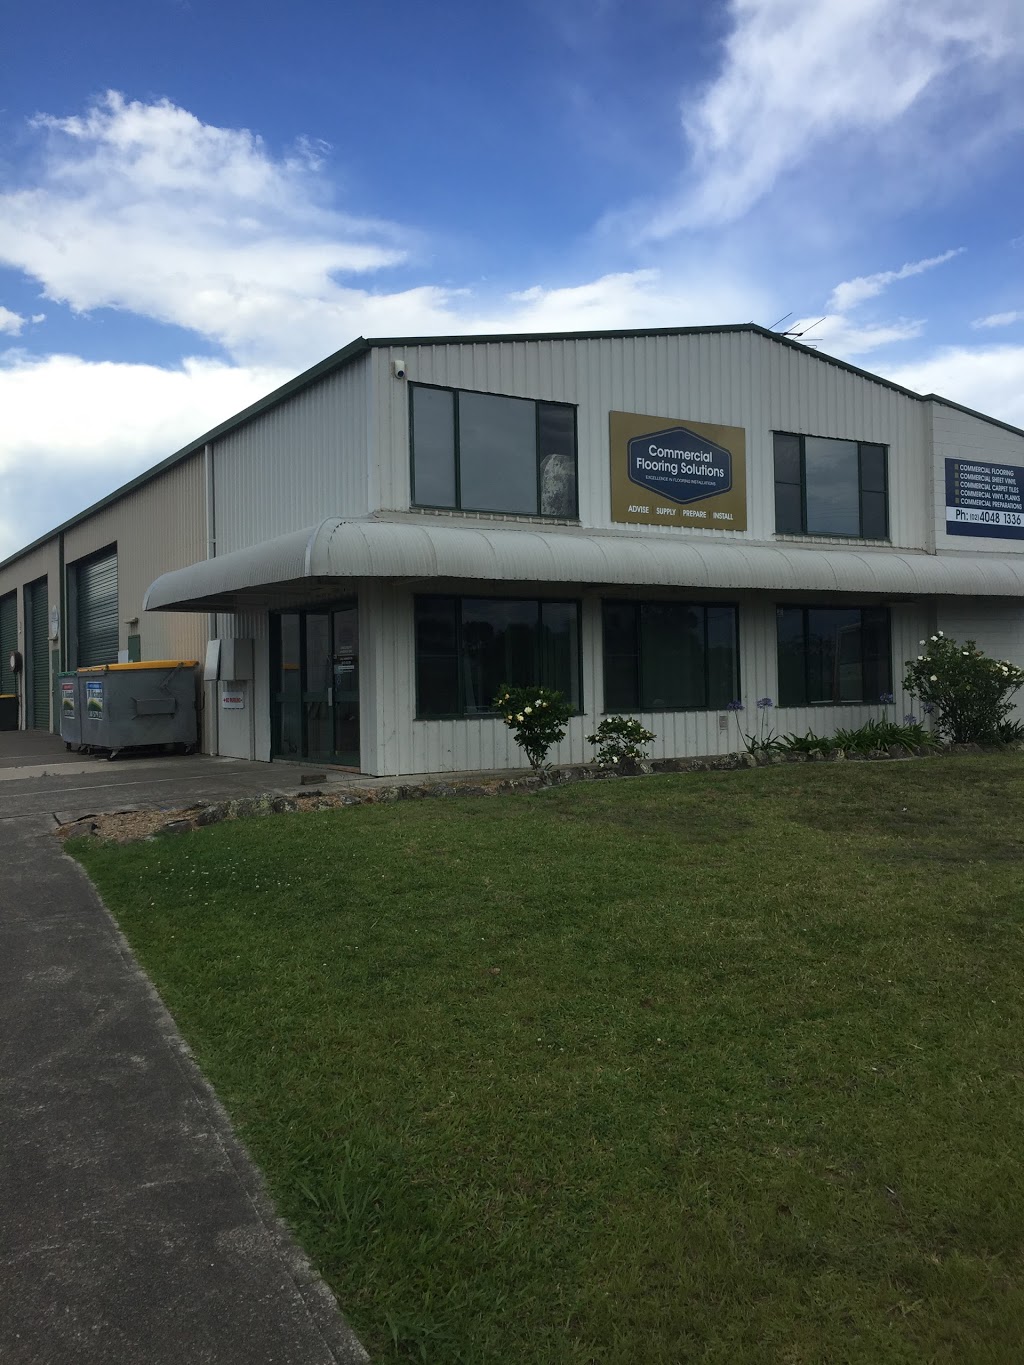 Commercial Flooring Solutions | unit 1/4 Skyline Way, Gateshead NSW 2290, Australia | Phone: 0412 652 255